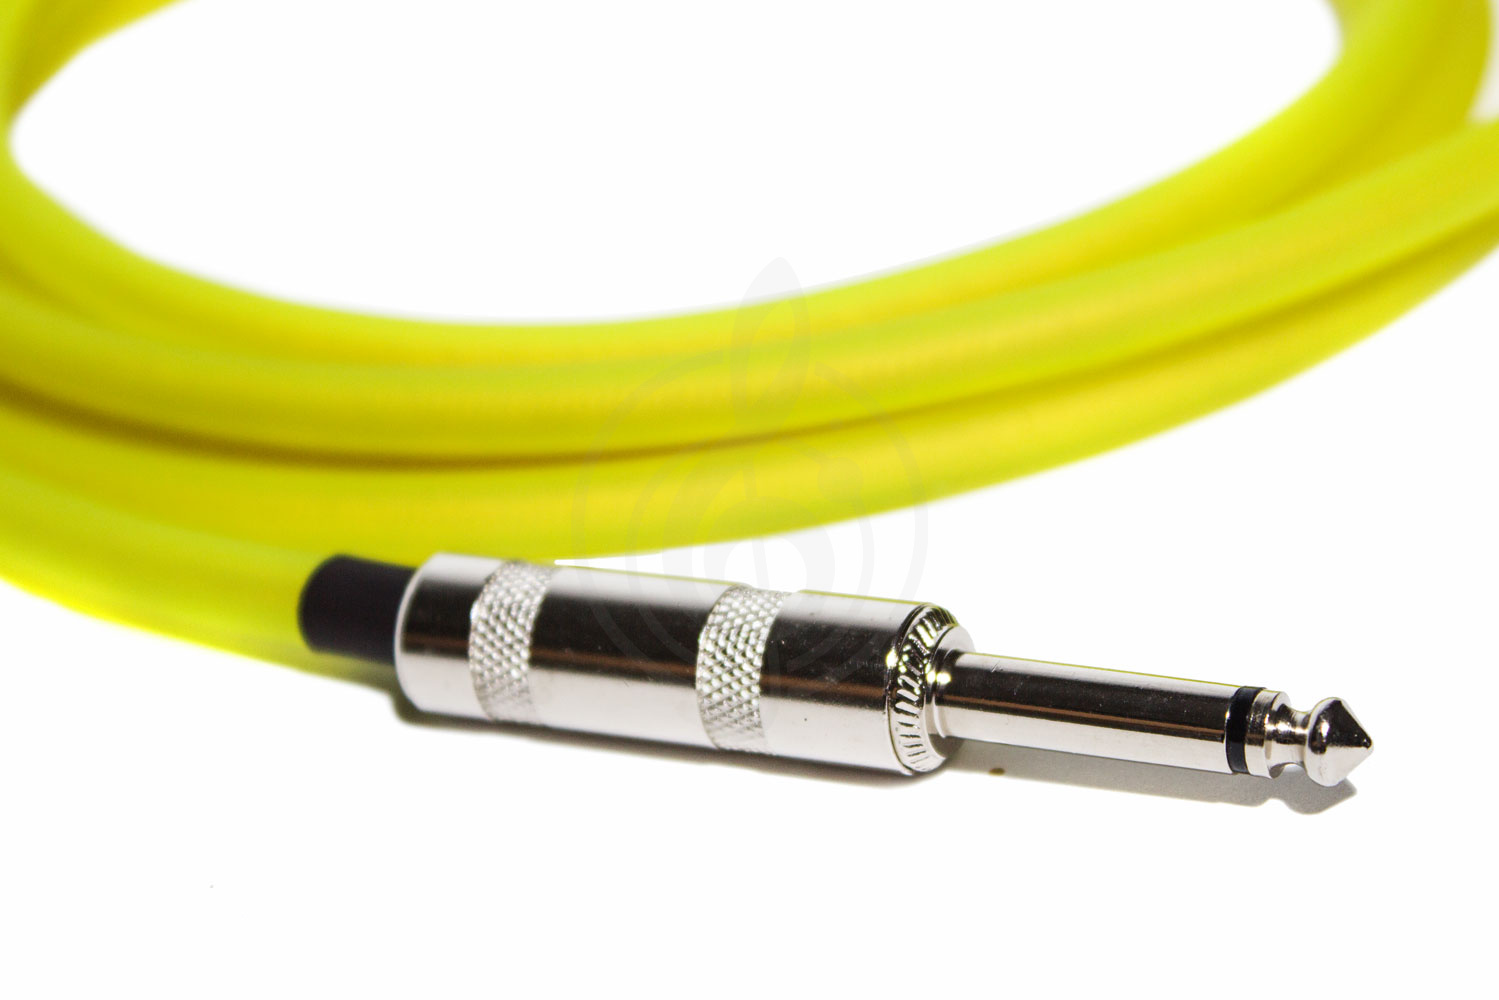  Jack-Jack инструментальный кабель Kirlin Kirlin IM-201-3 YEF Инструментальный кабель 3м IM-201-3 YEF - фото 2